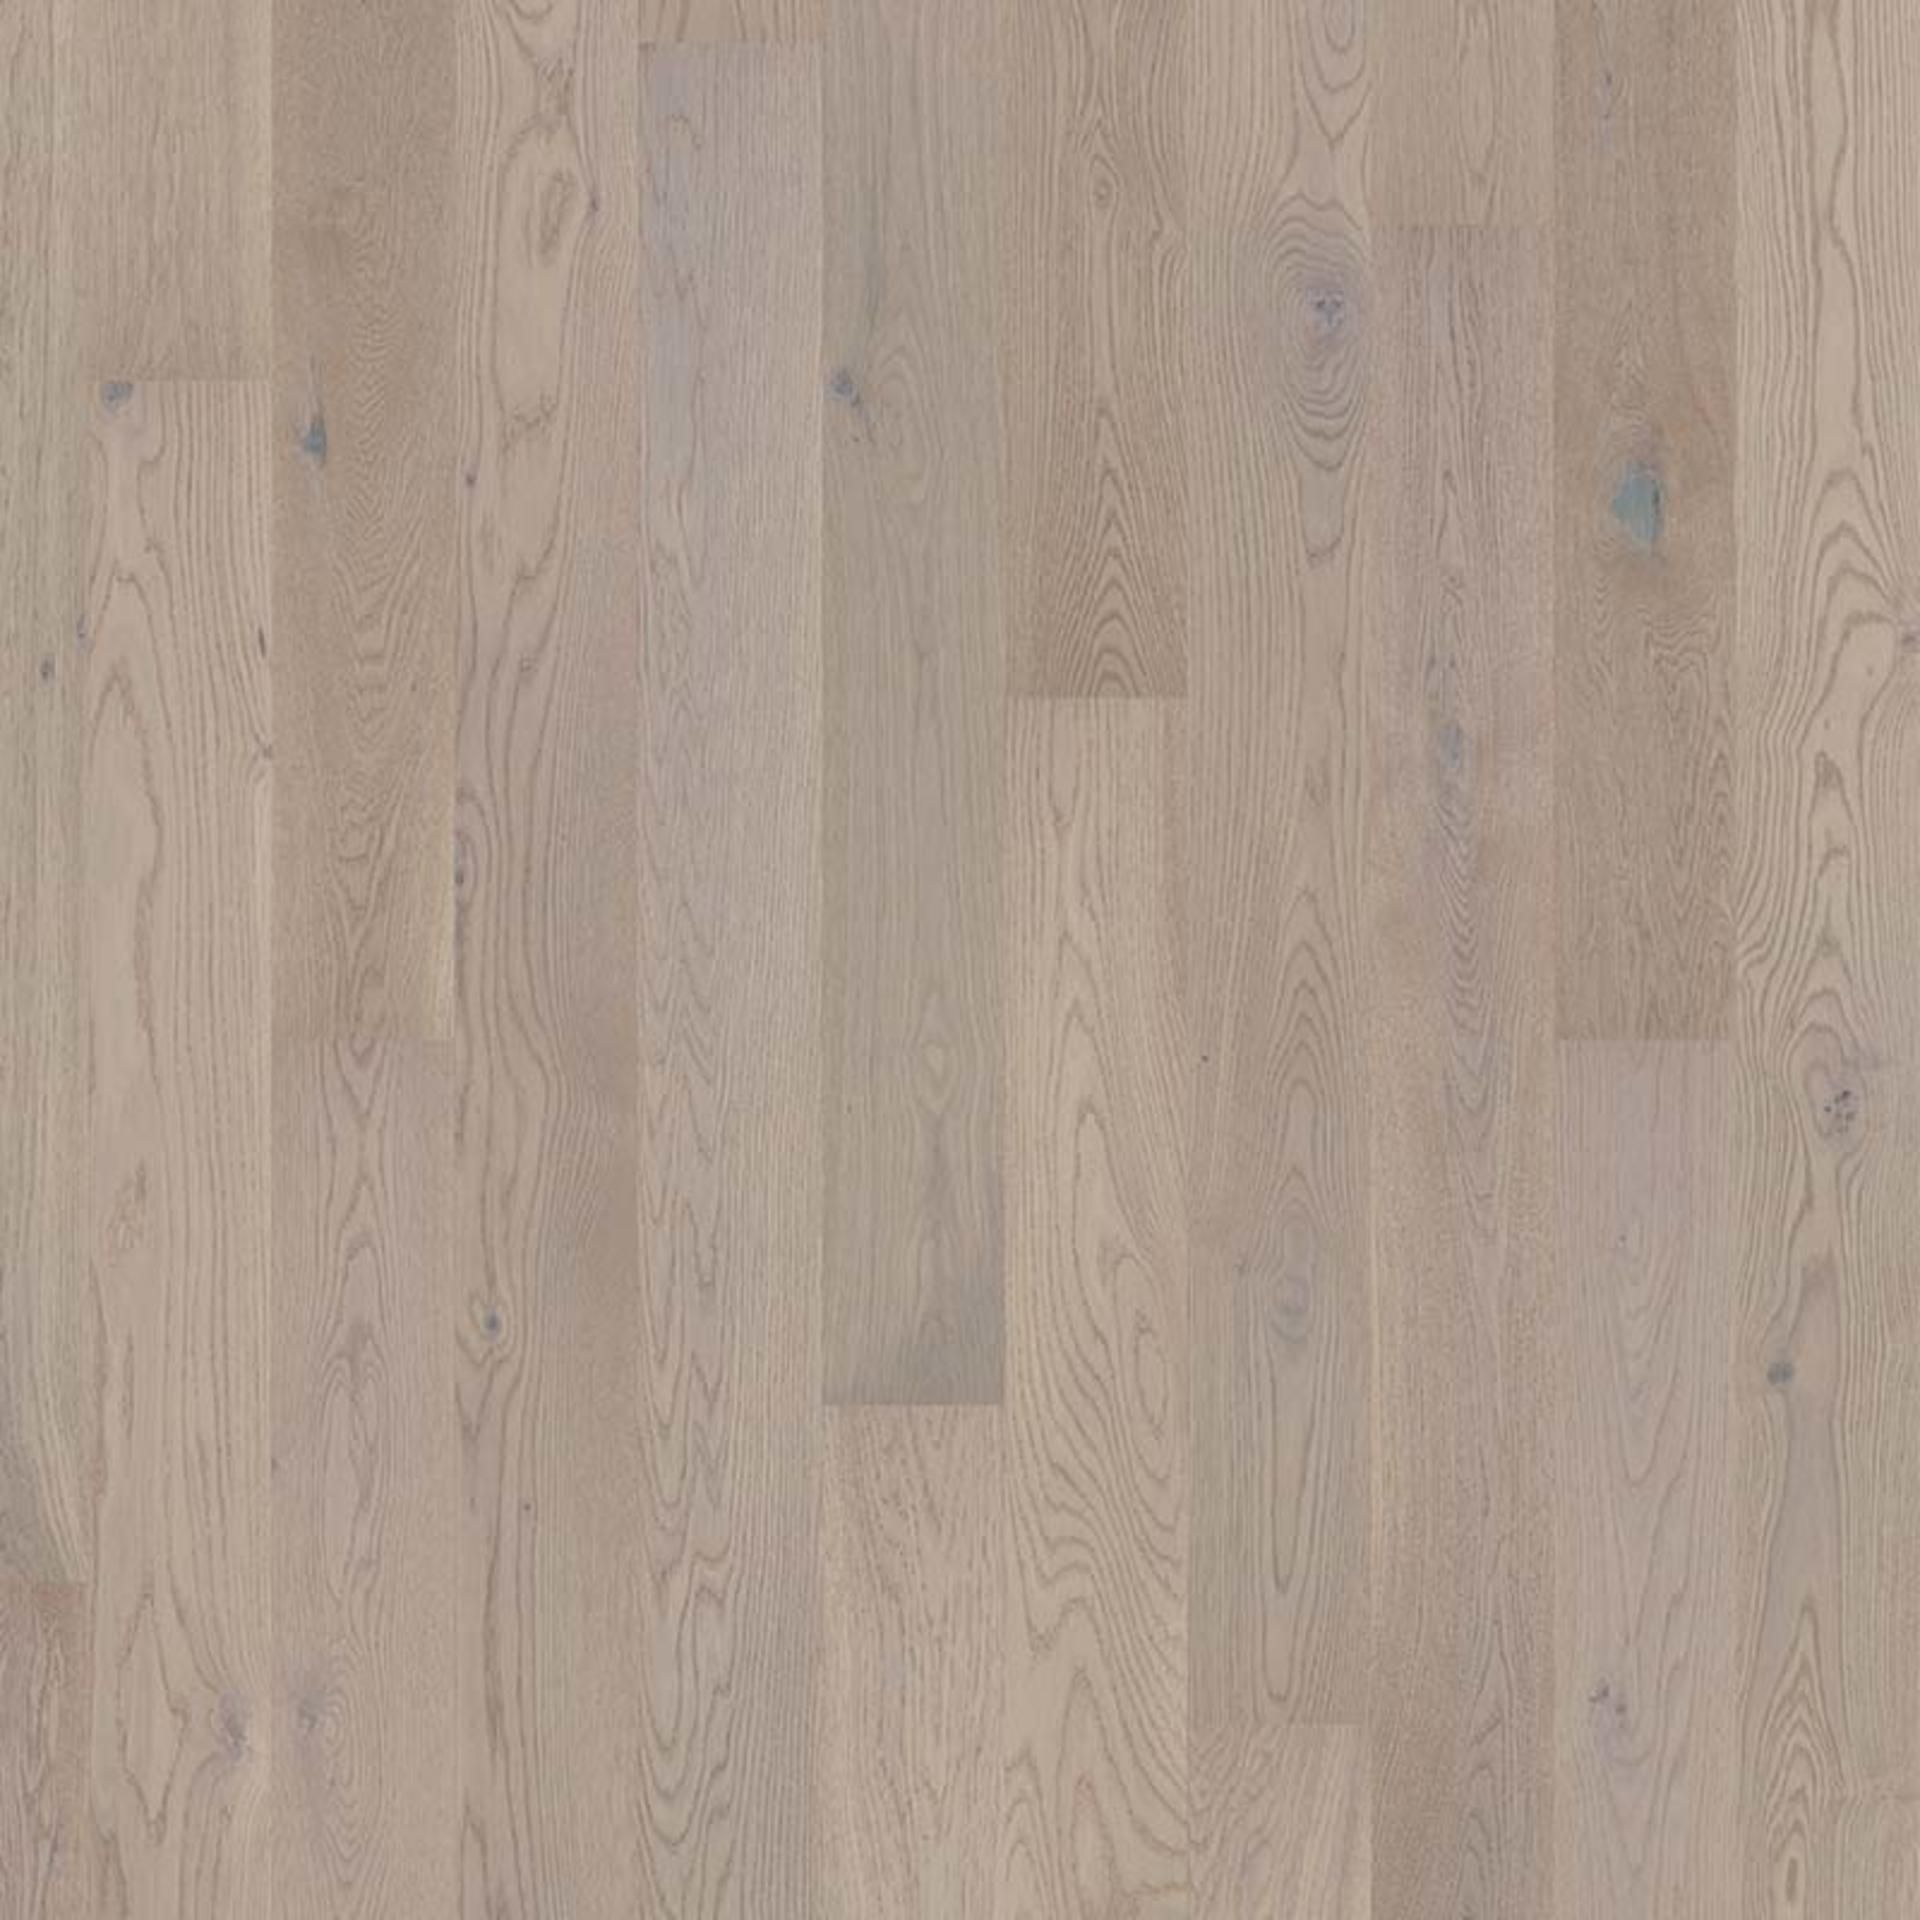 Holzboden Eiche Misty Grey gebürstet 1 Stab MADRID-TB15 Planke 162 x 2520 mm